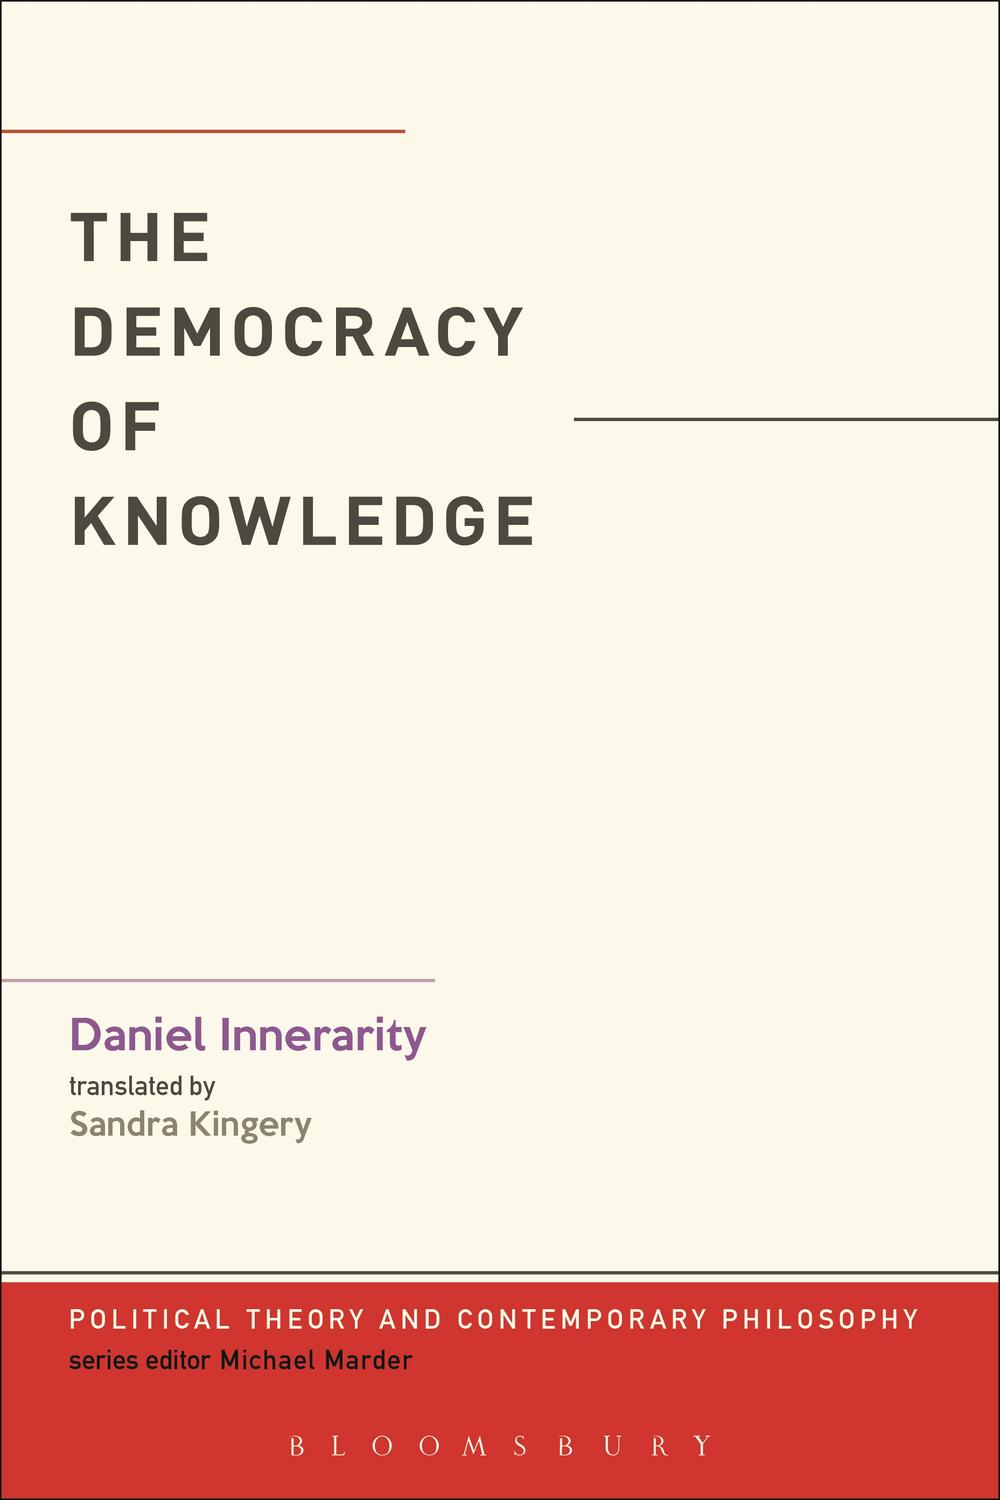 The Democracy of Knowledge - Daniel Innerarity, Sandra Kingery